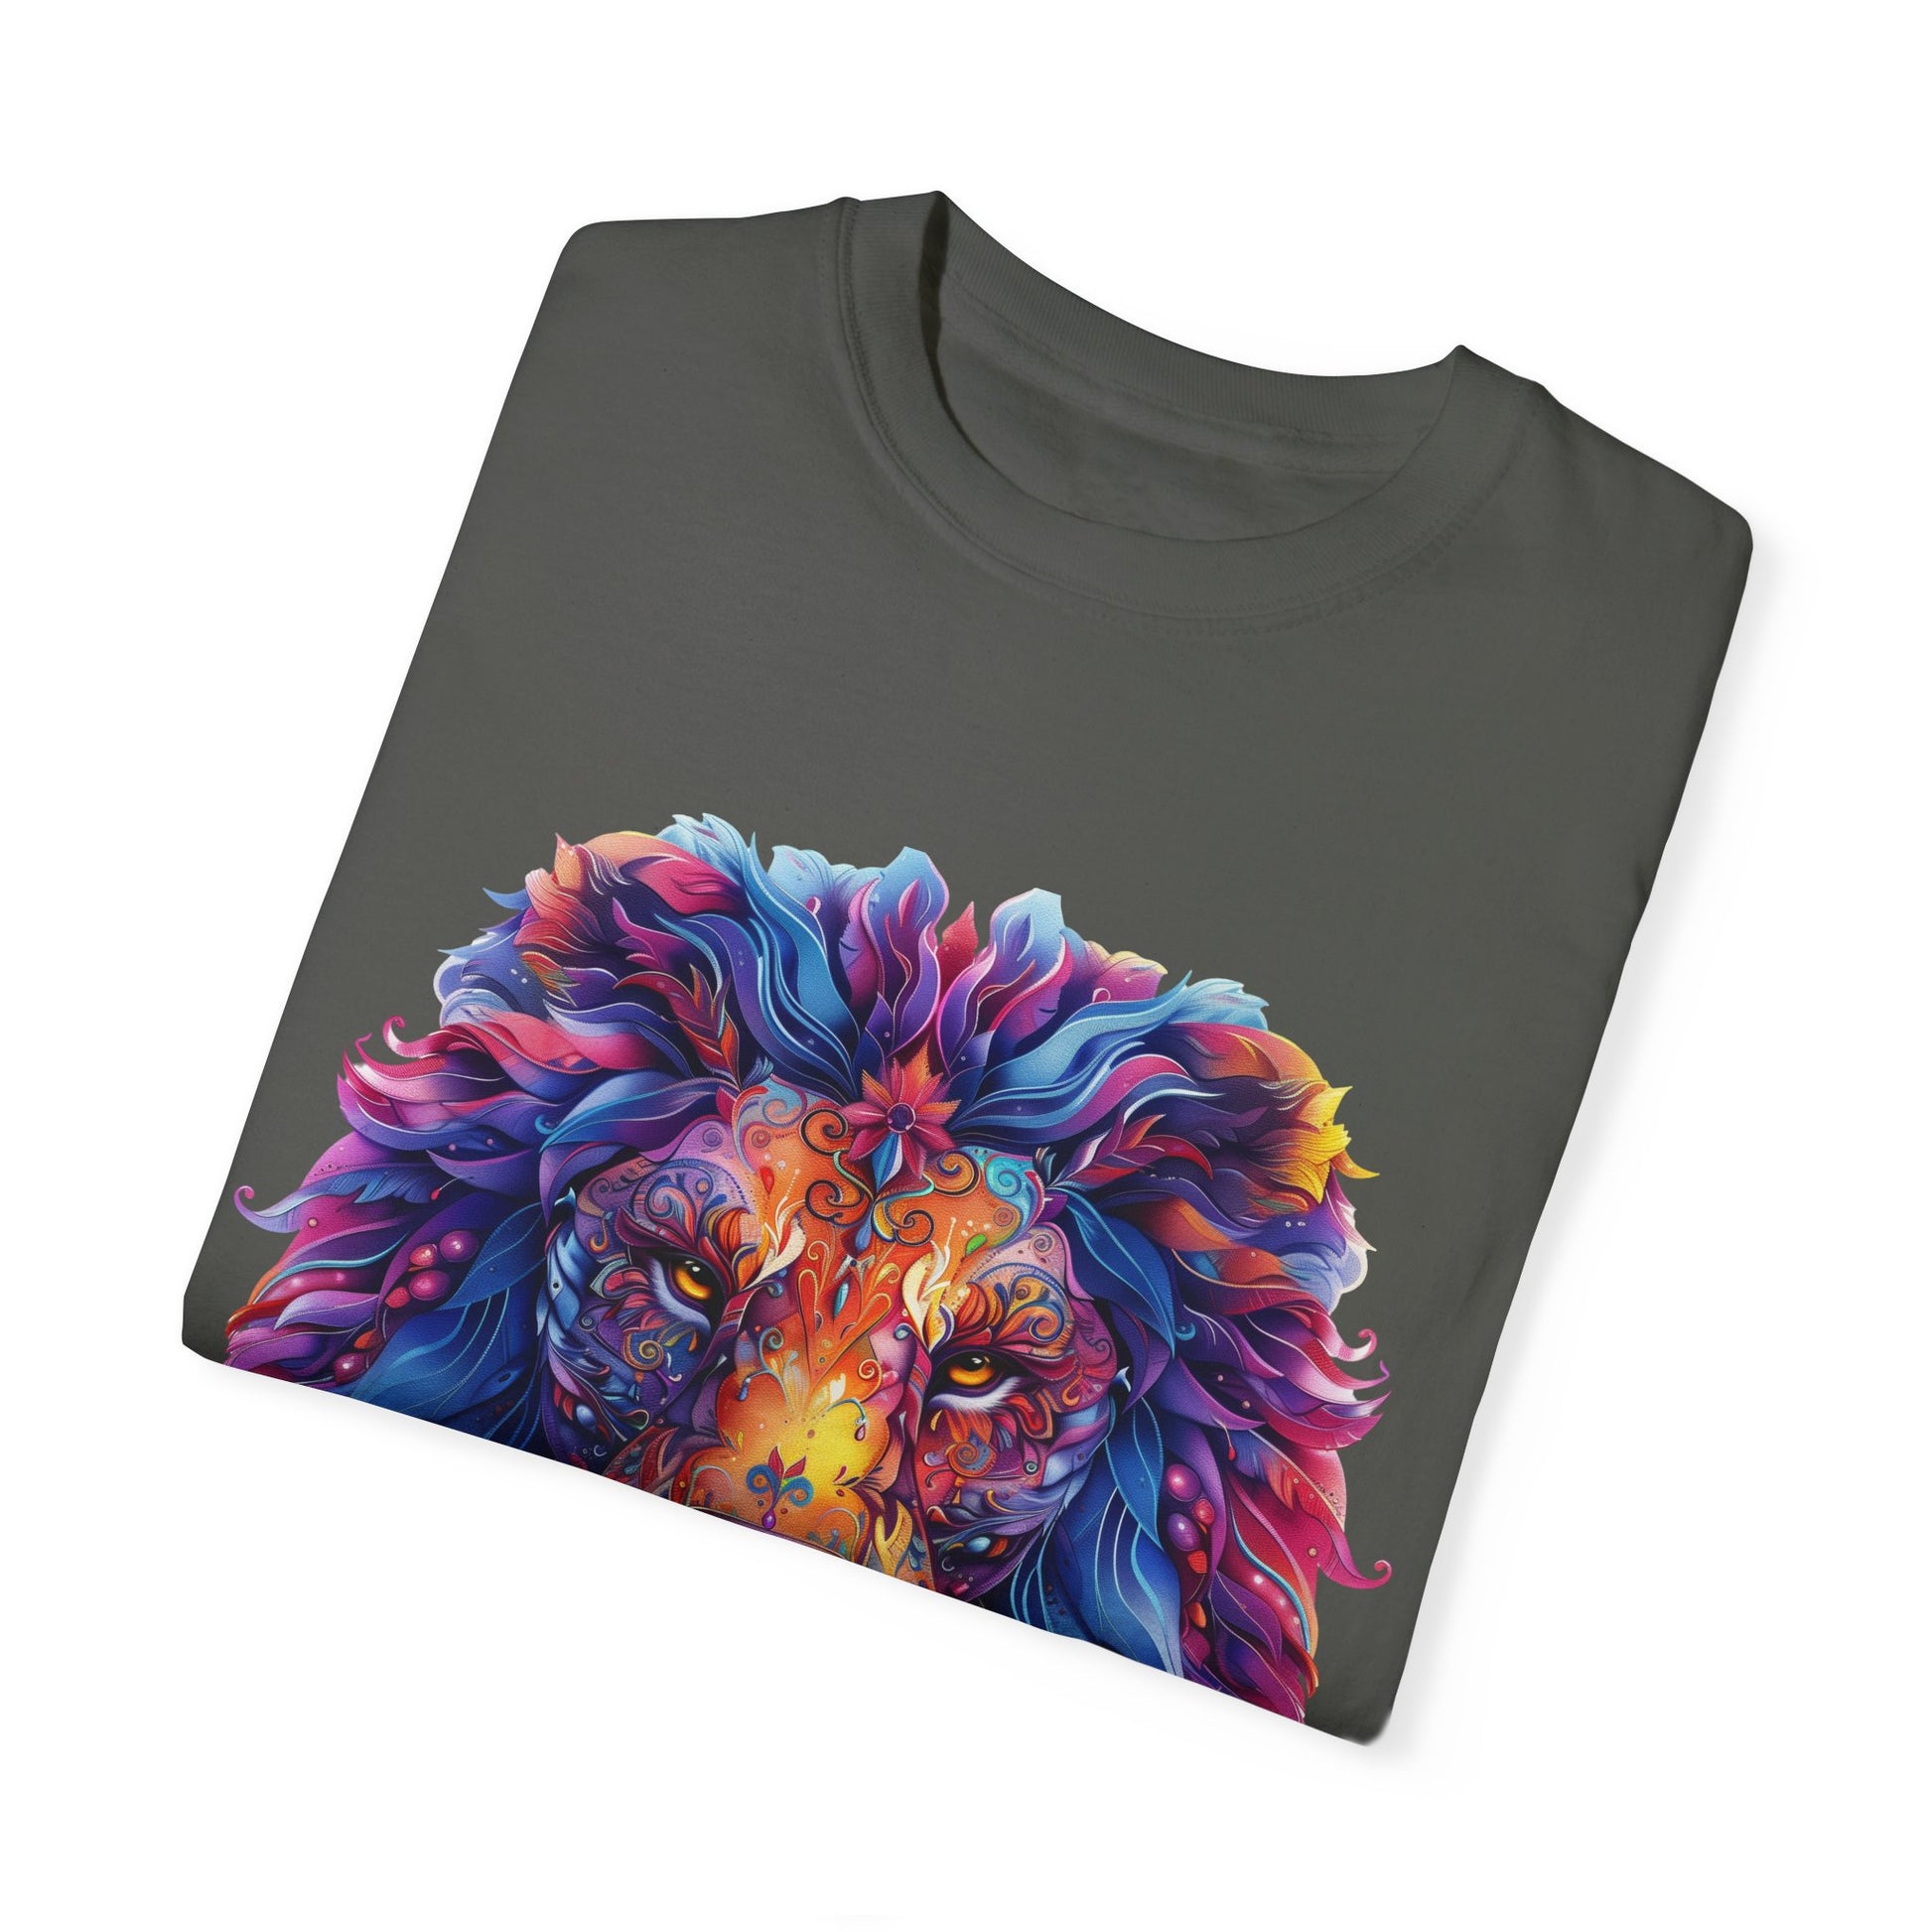 Lion Head Cool Graphic Design Novelty Unisex Garment-dyed T-shirt Cotton Funny Humorous Graphic Soft Premium Unisex Men Women Pepper T-shirt Birthday Gift-50